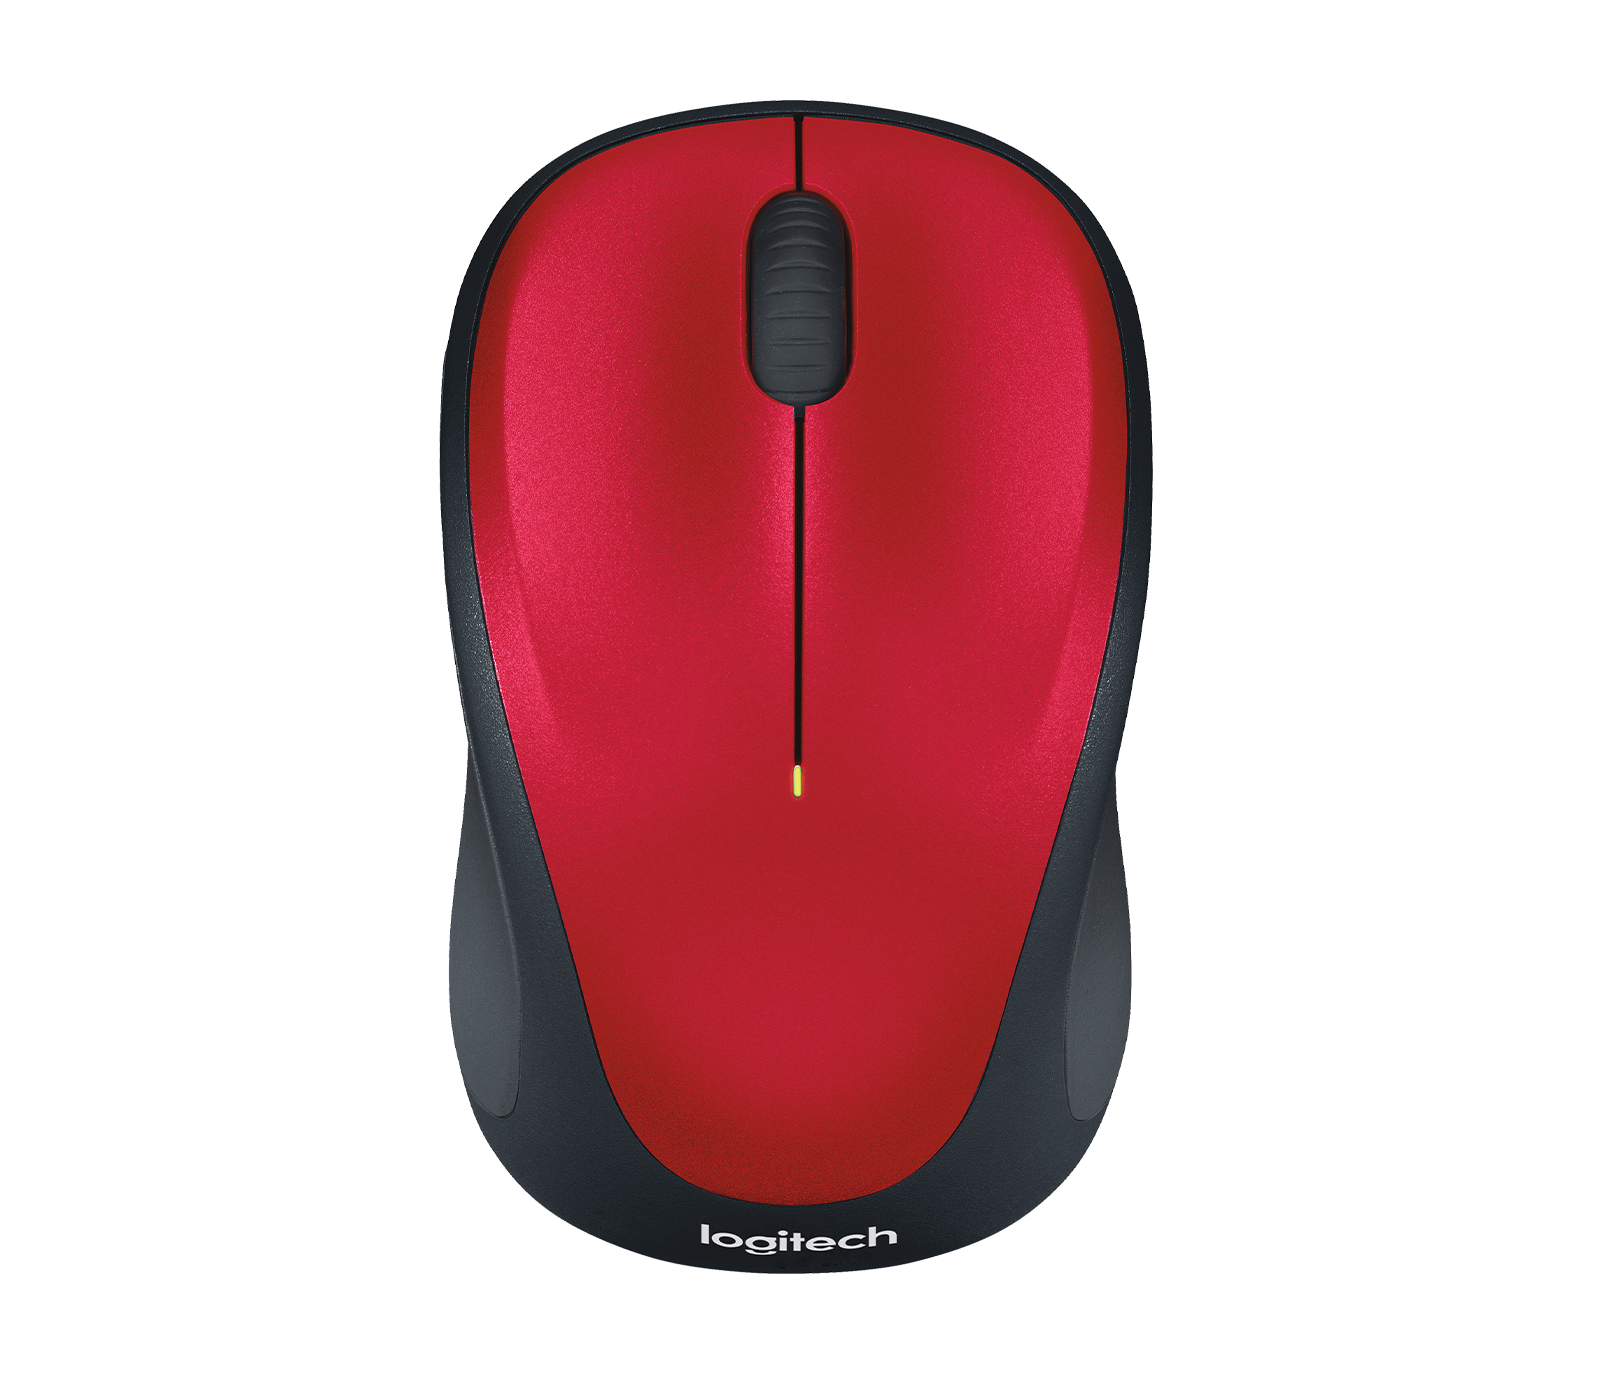 Logitech M317 Mouse with Design